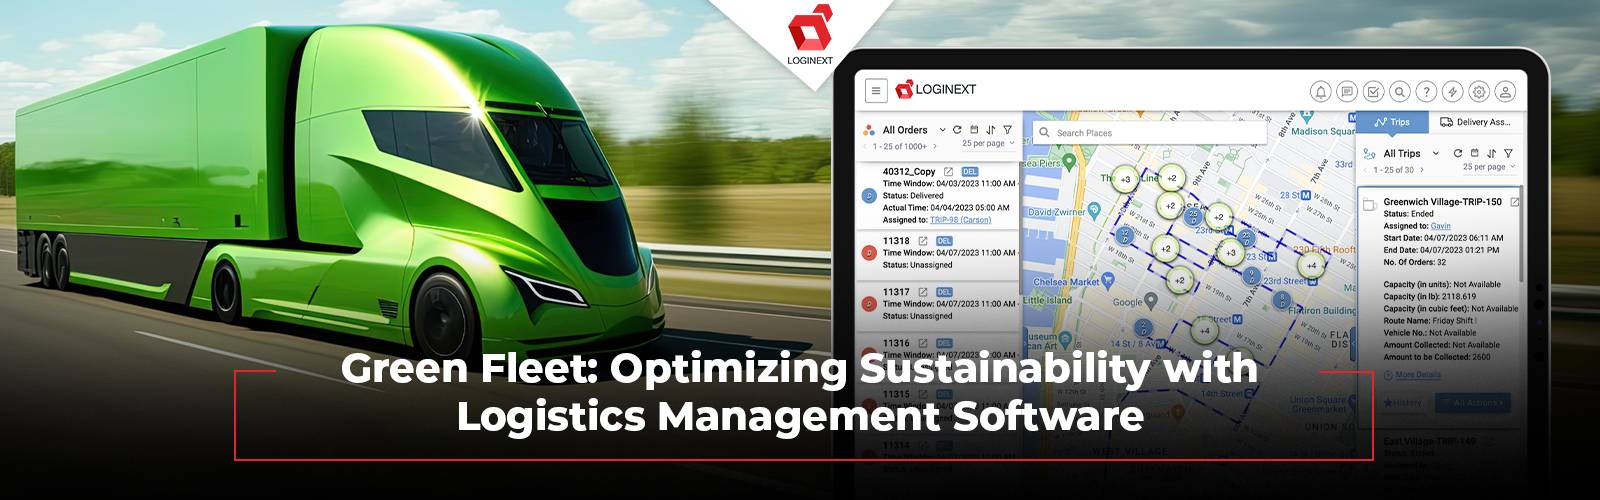 Logistics Management Software Drives Green Fleet Sustainability